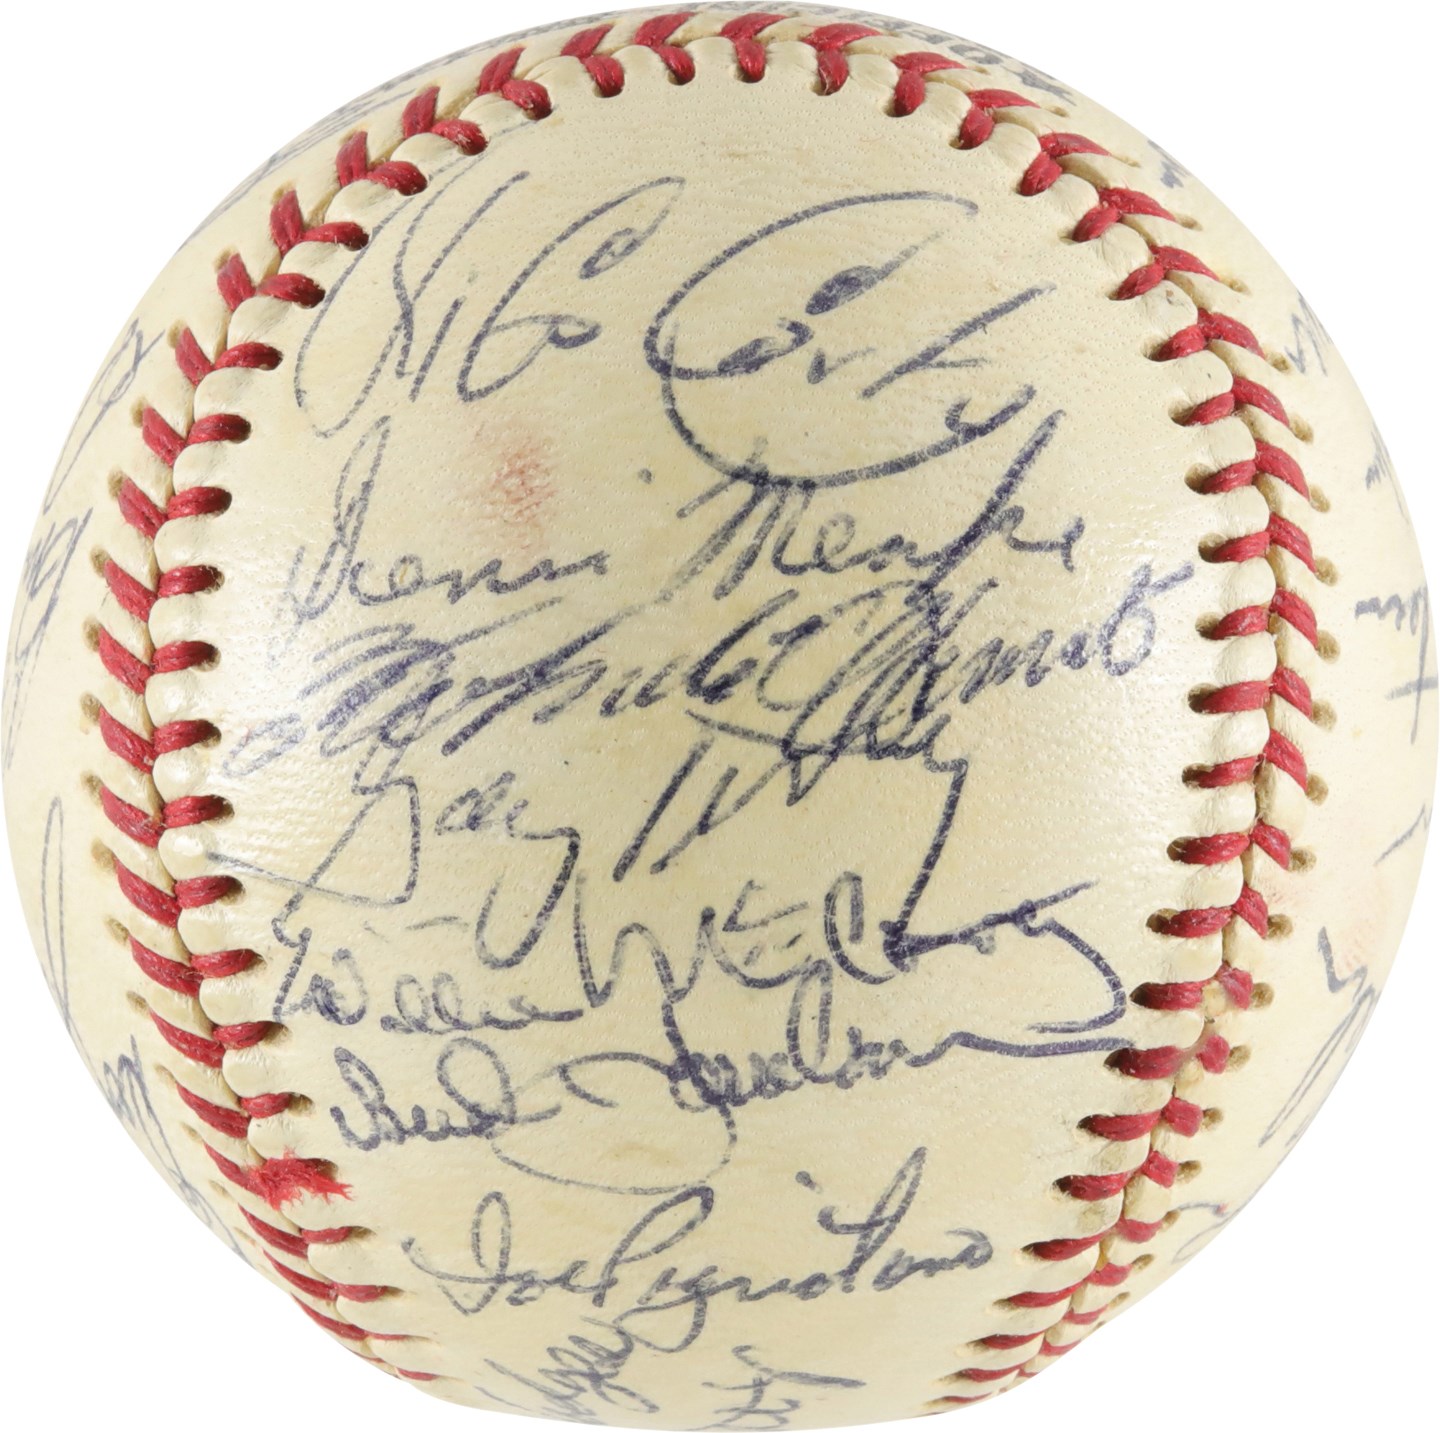 High Grade 1970 National League All Star Team Signed Baseball w/Roberto Clemente (PSA)